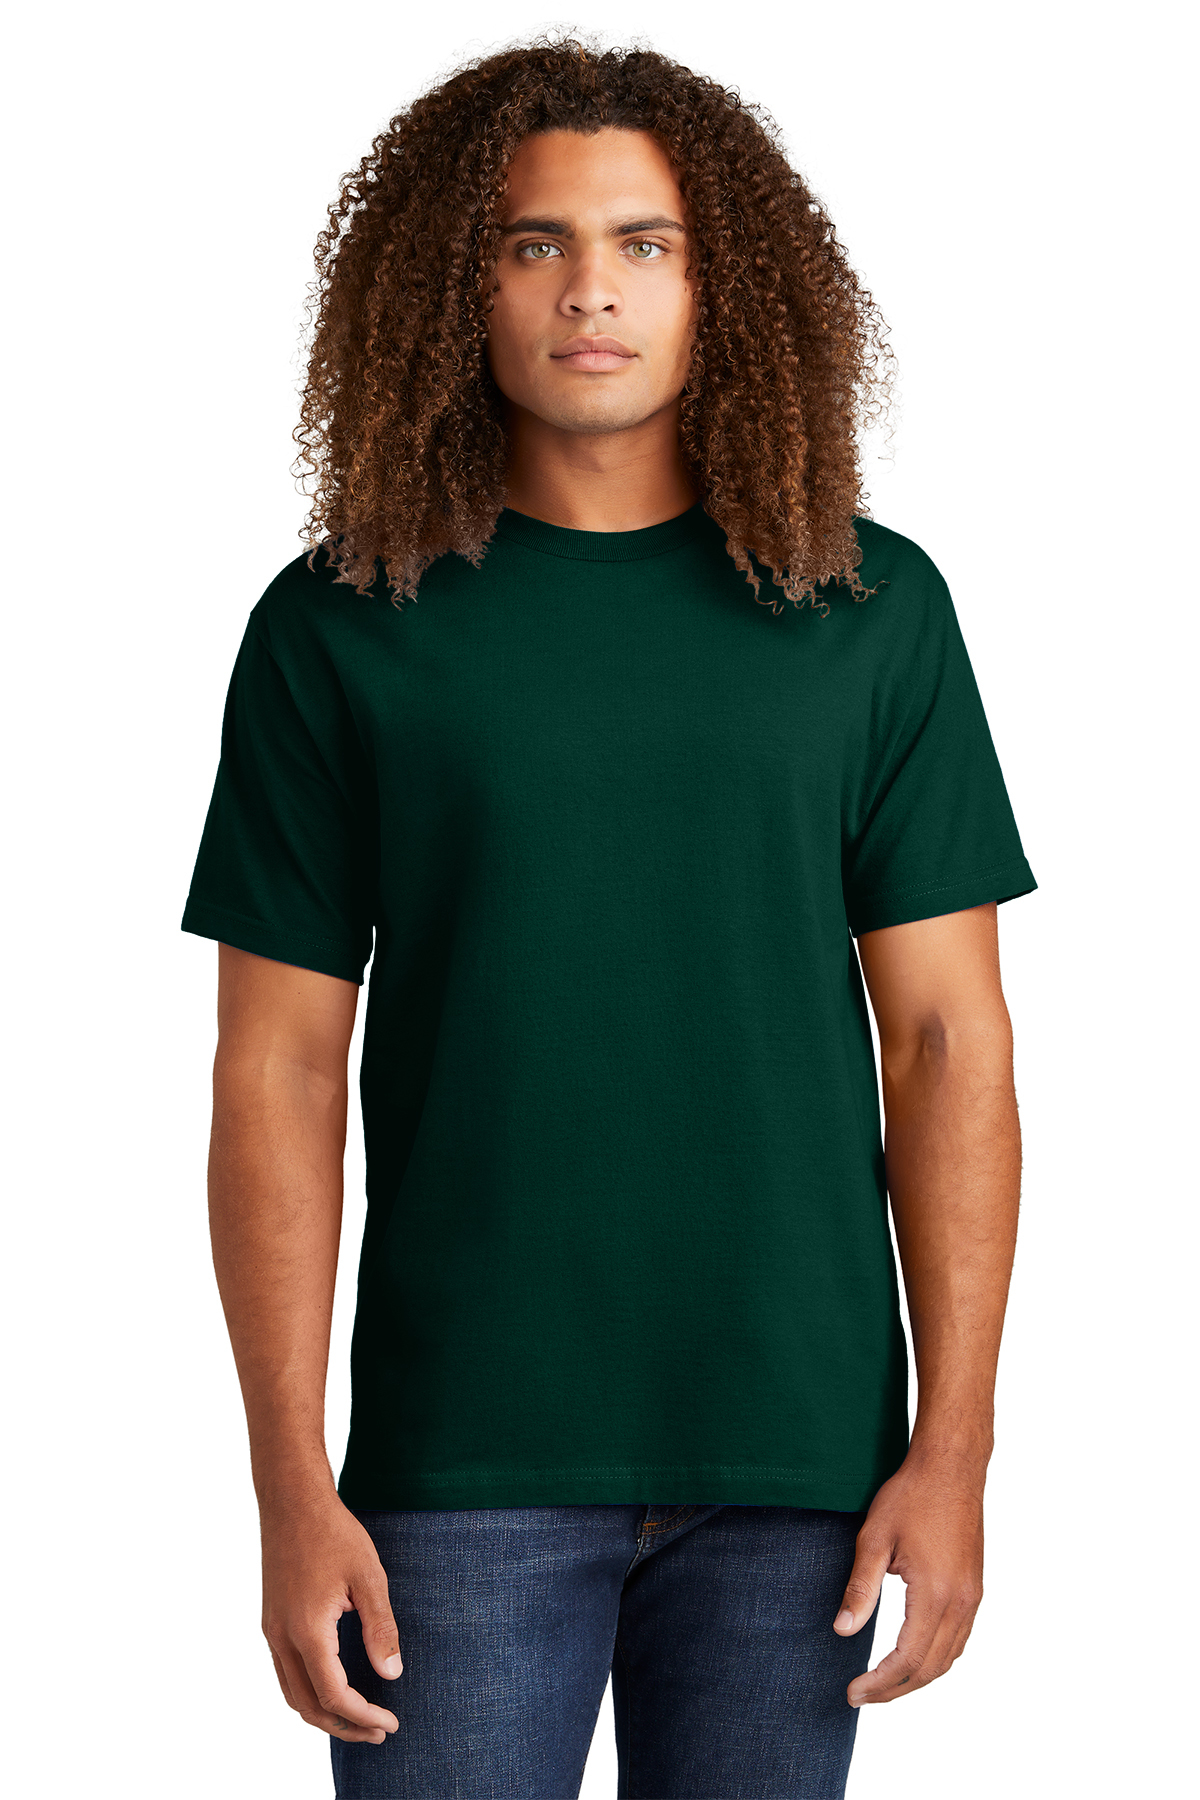 American Apparel Heavyweight Unisex T-Shirt, Product